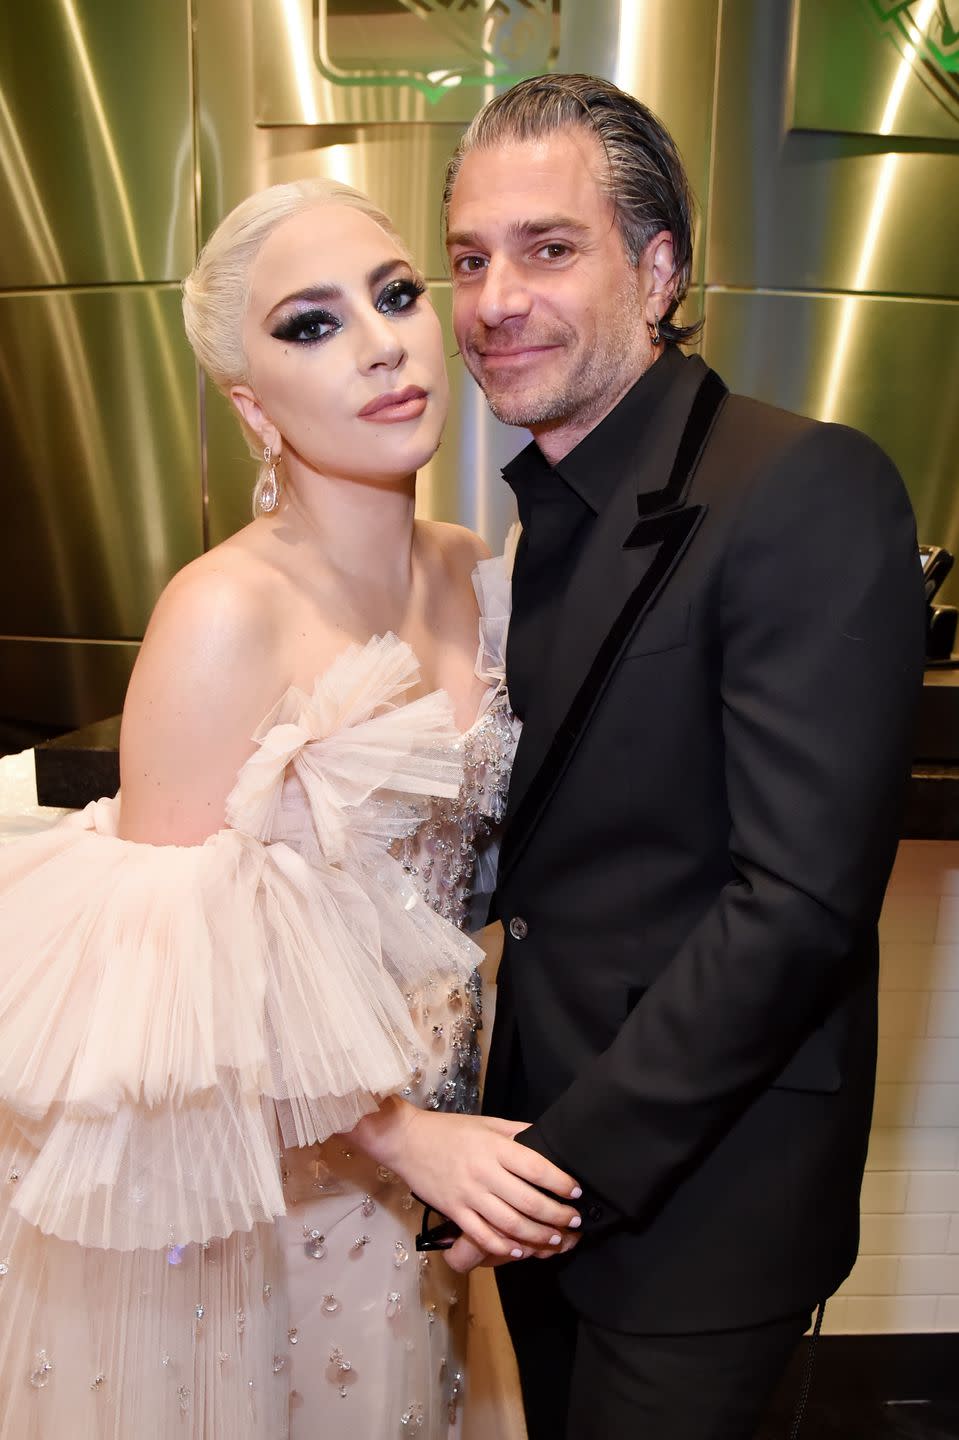 2) Lady Gaga and Christian Carino